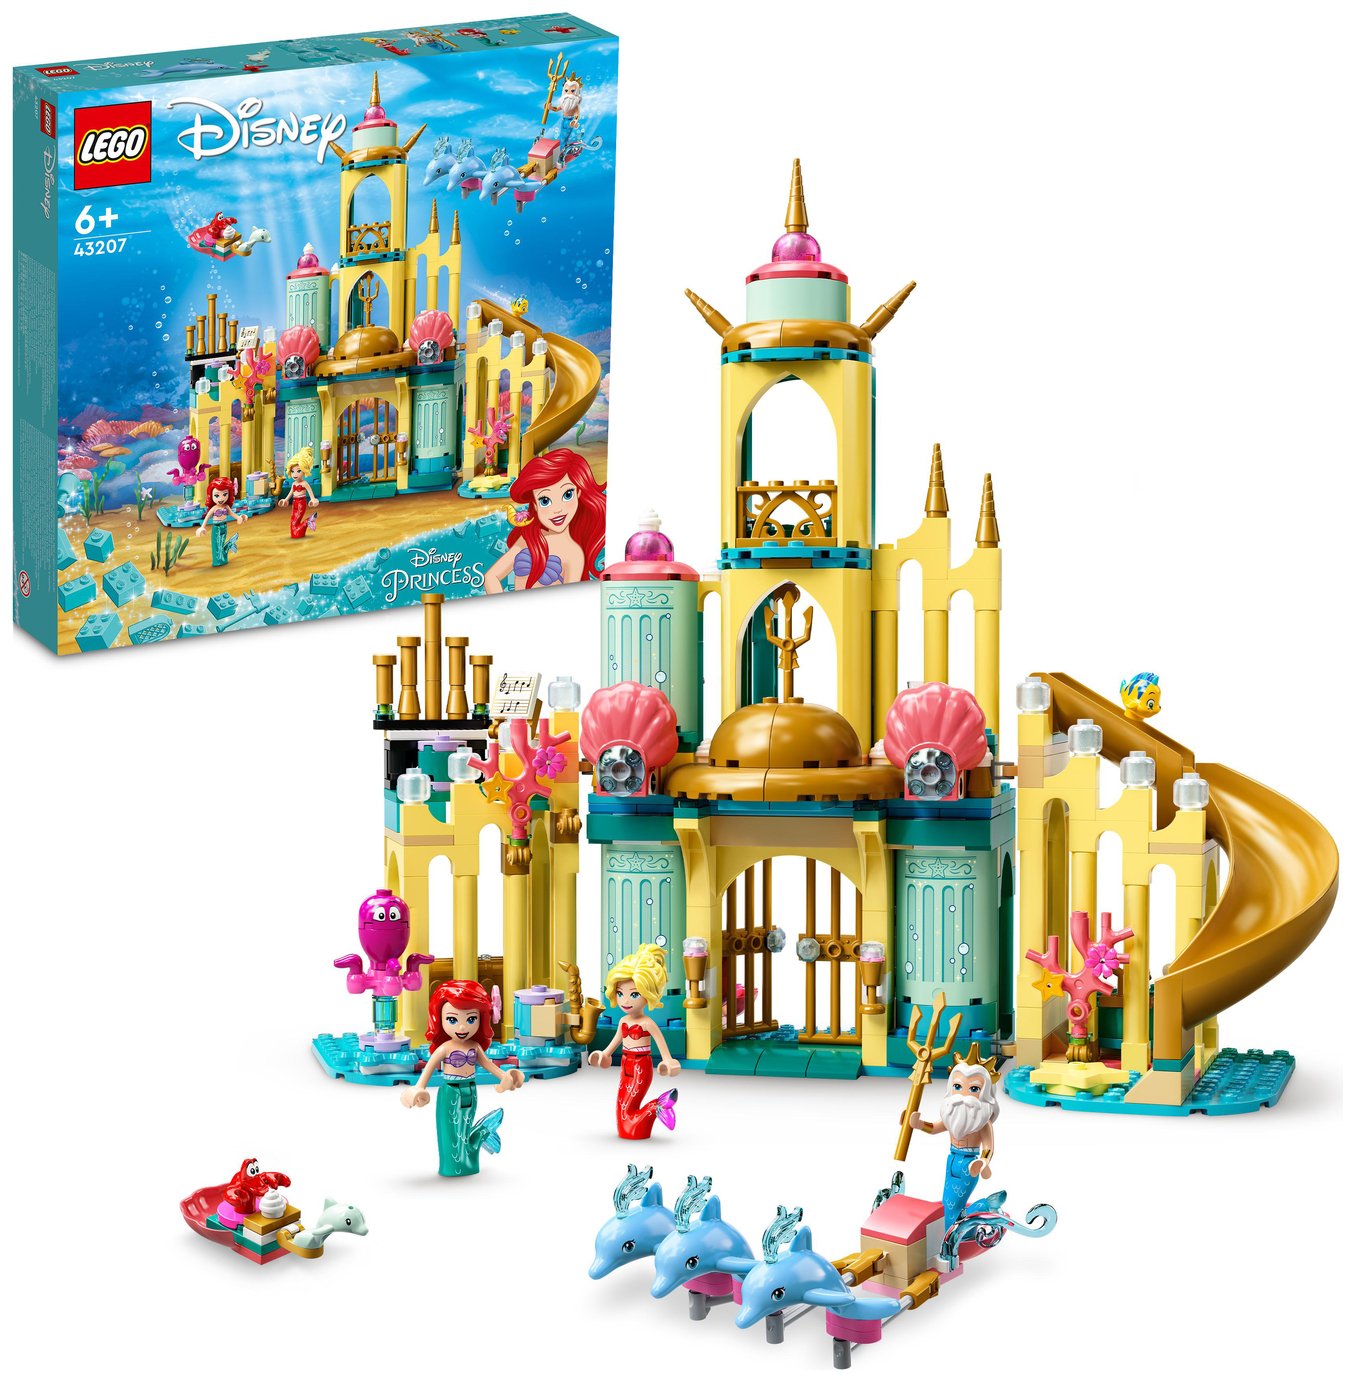 LEGO Disney Ariel's Underwater Palace Castle Toy 43207